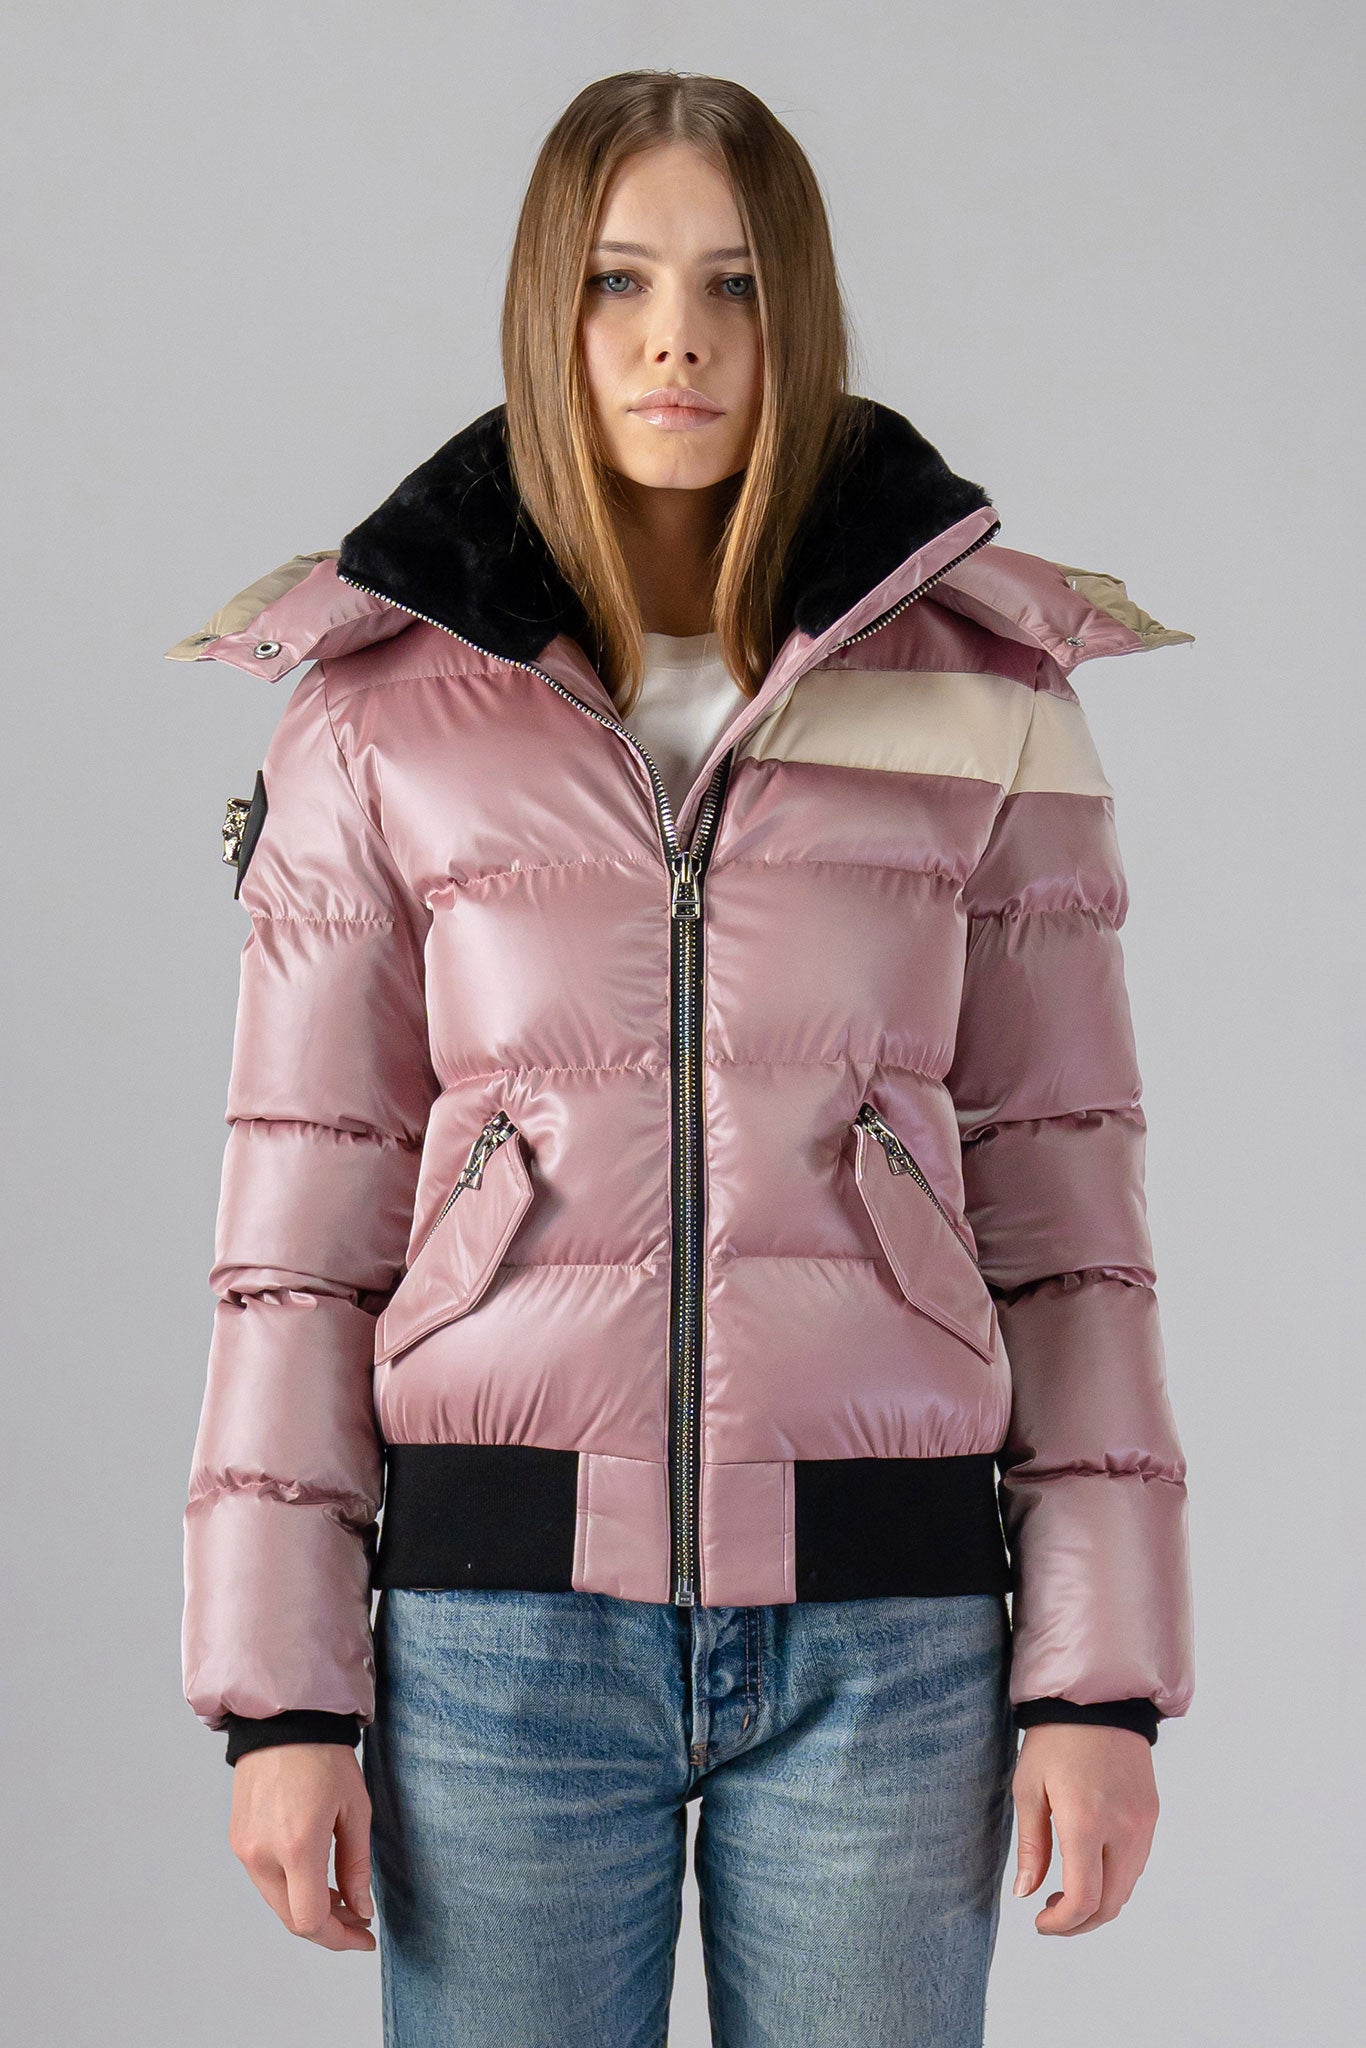 Woodpecker Women's Woody Bomber Winter coat. High-end Canadian designer winter coat for women in “Arctic Rose